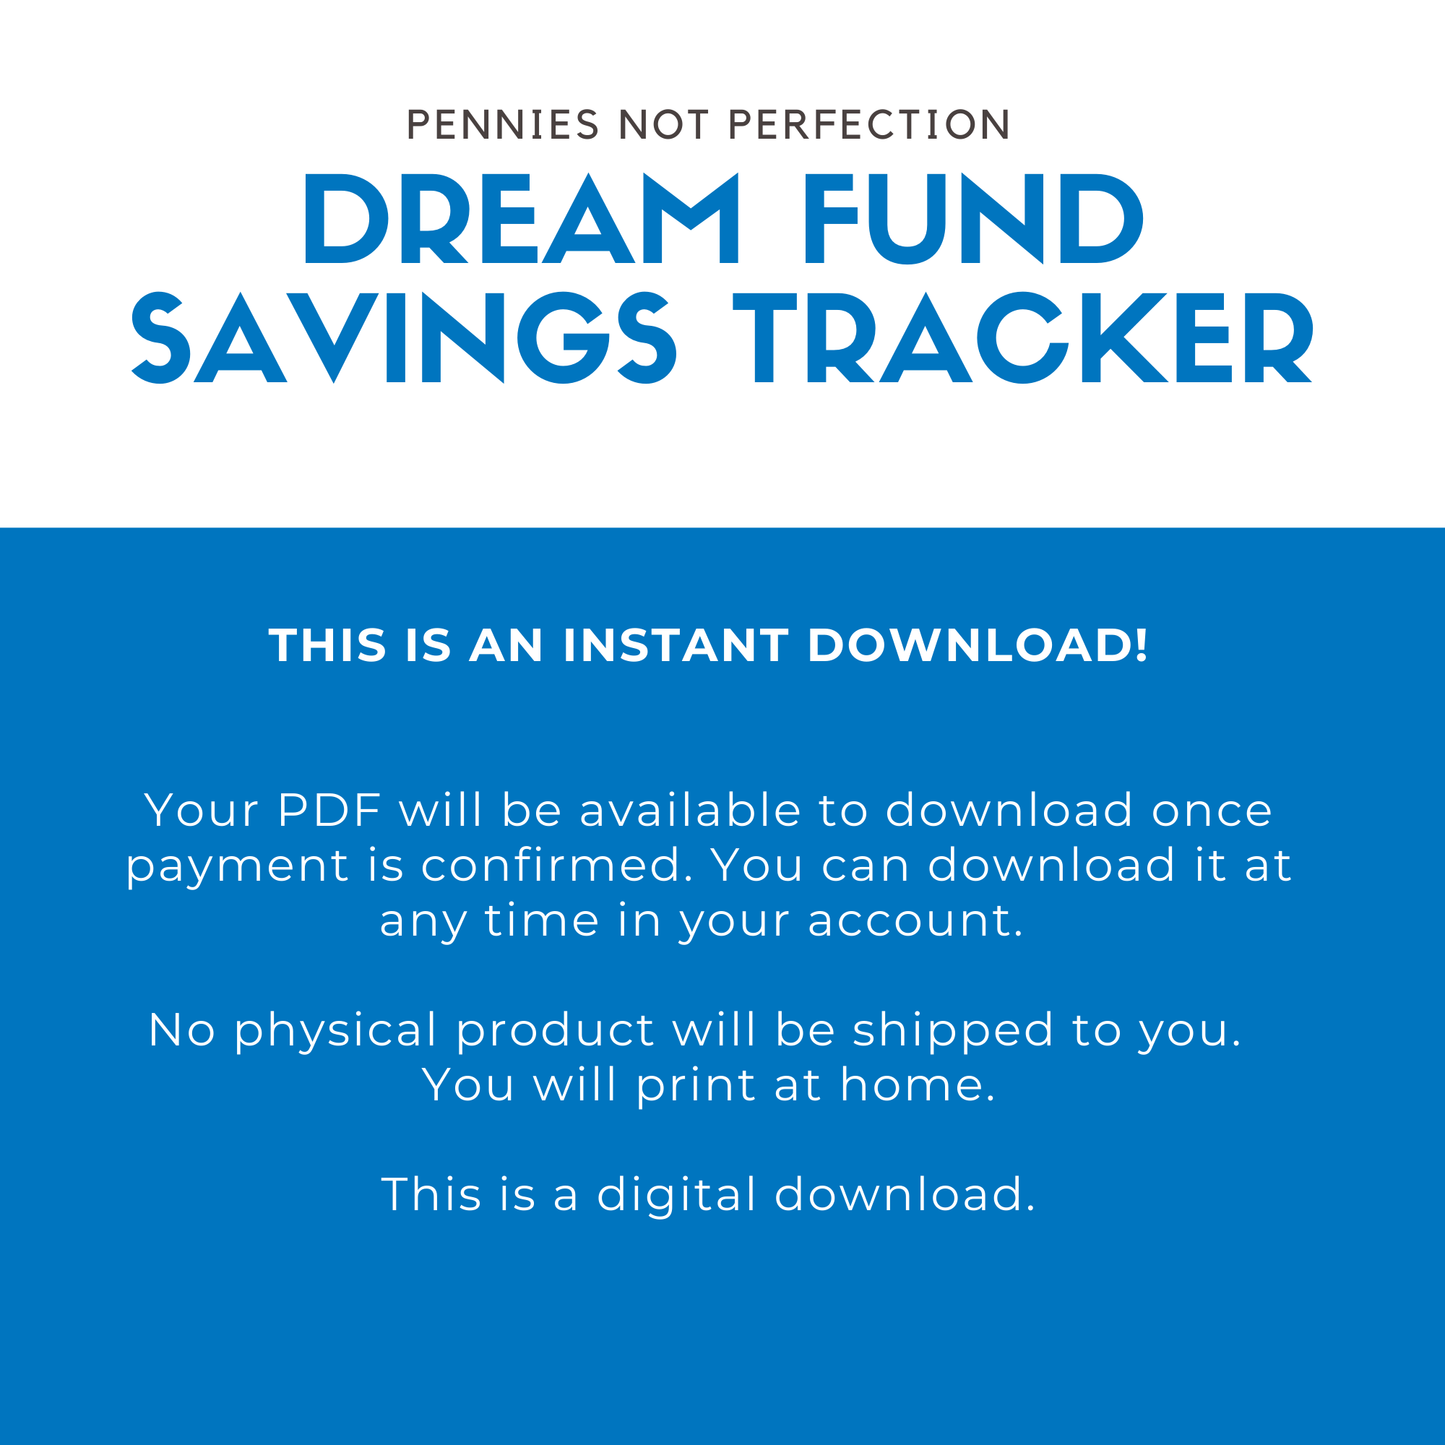 Dream Fund Savings Tracker Printable 1